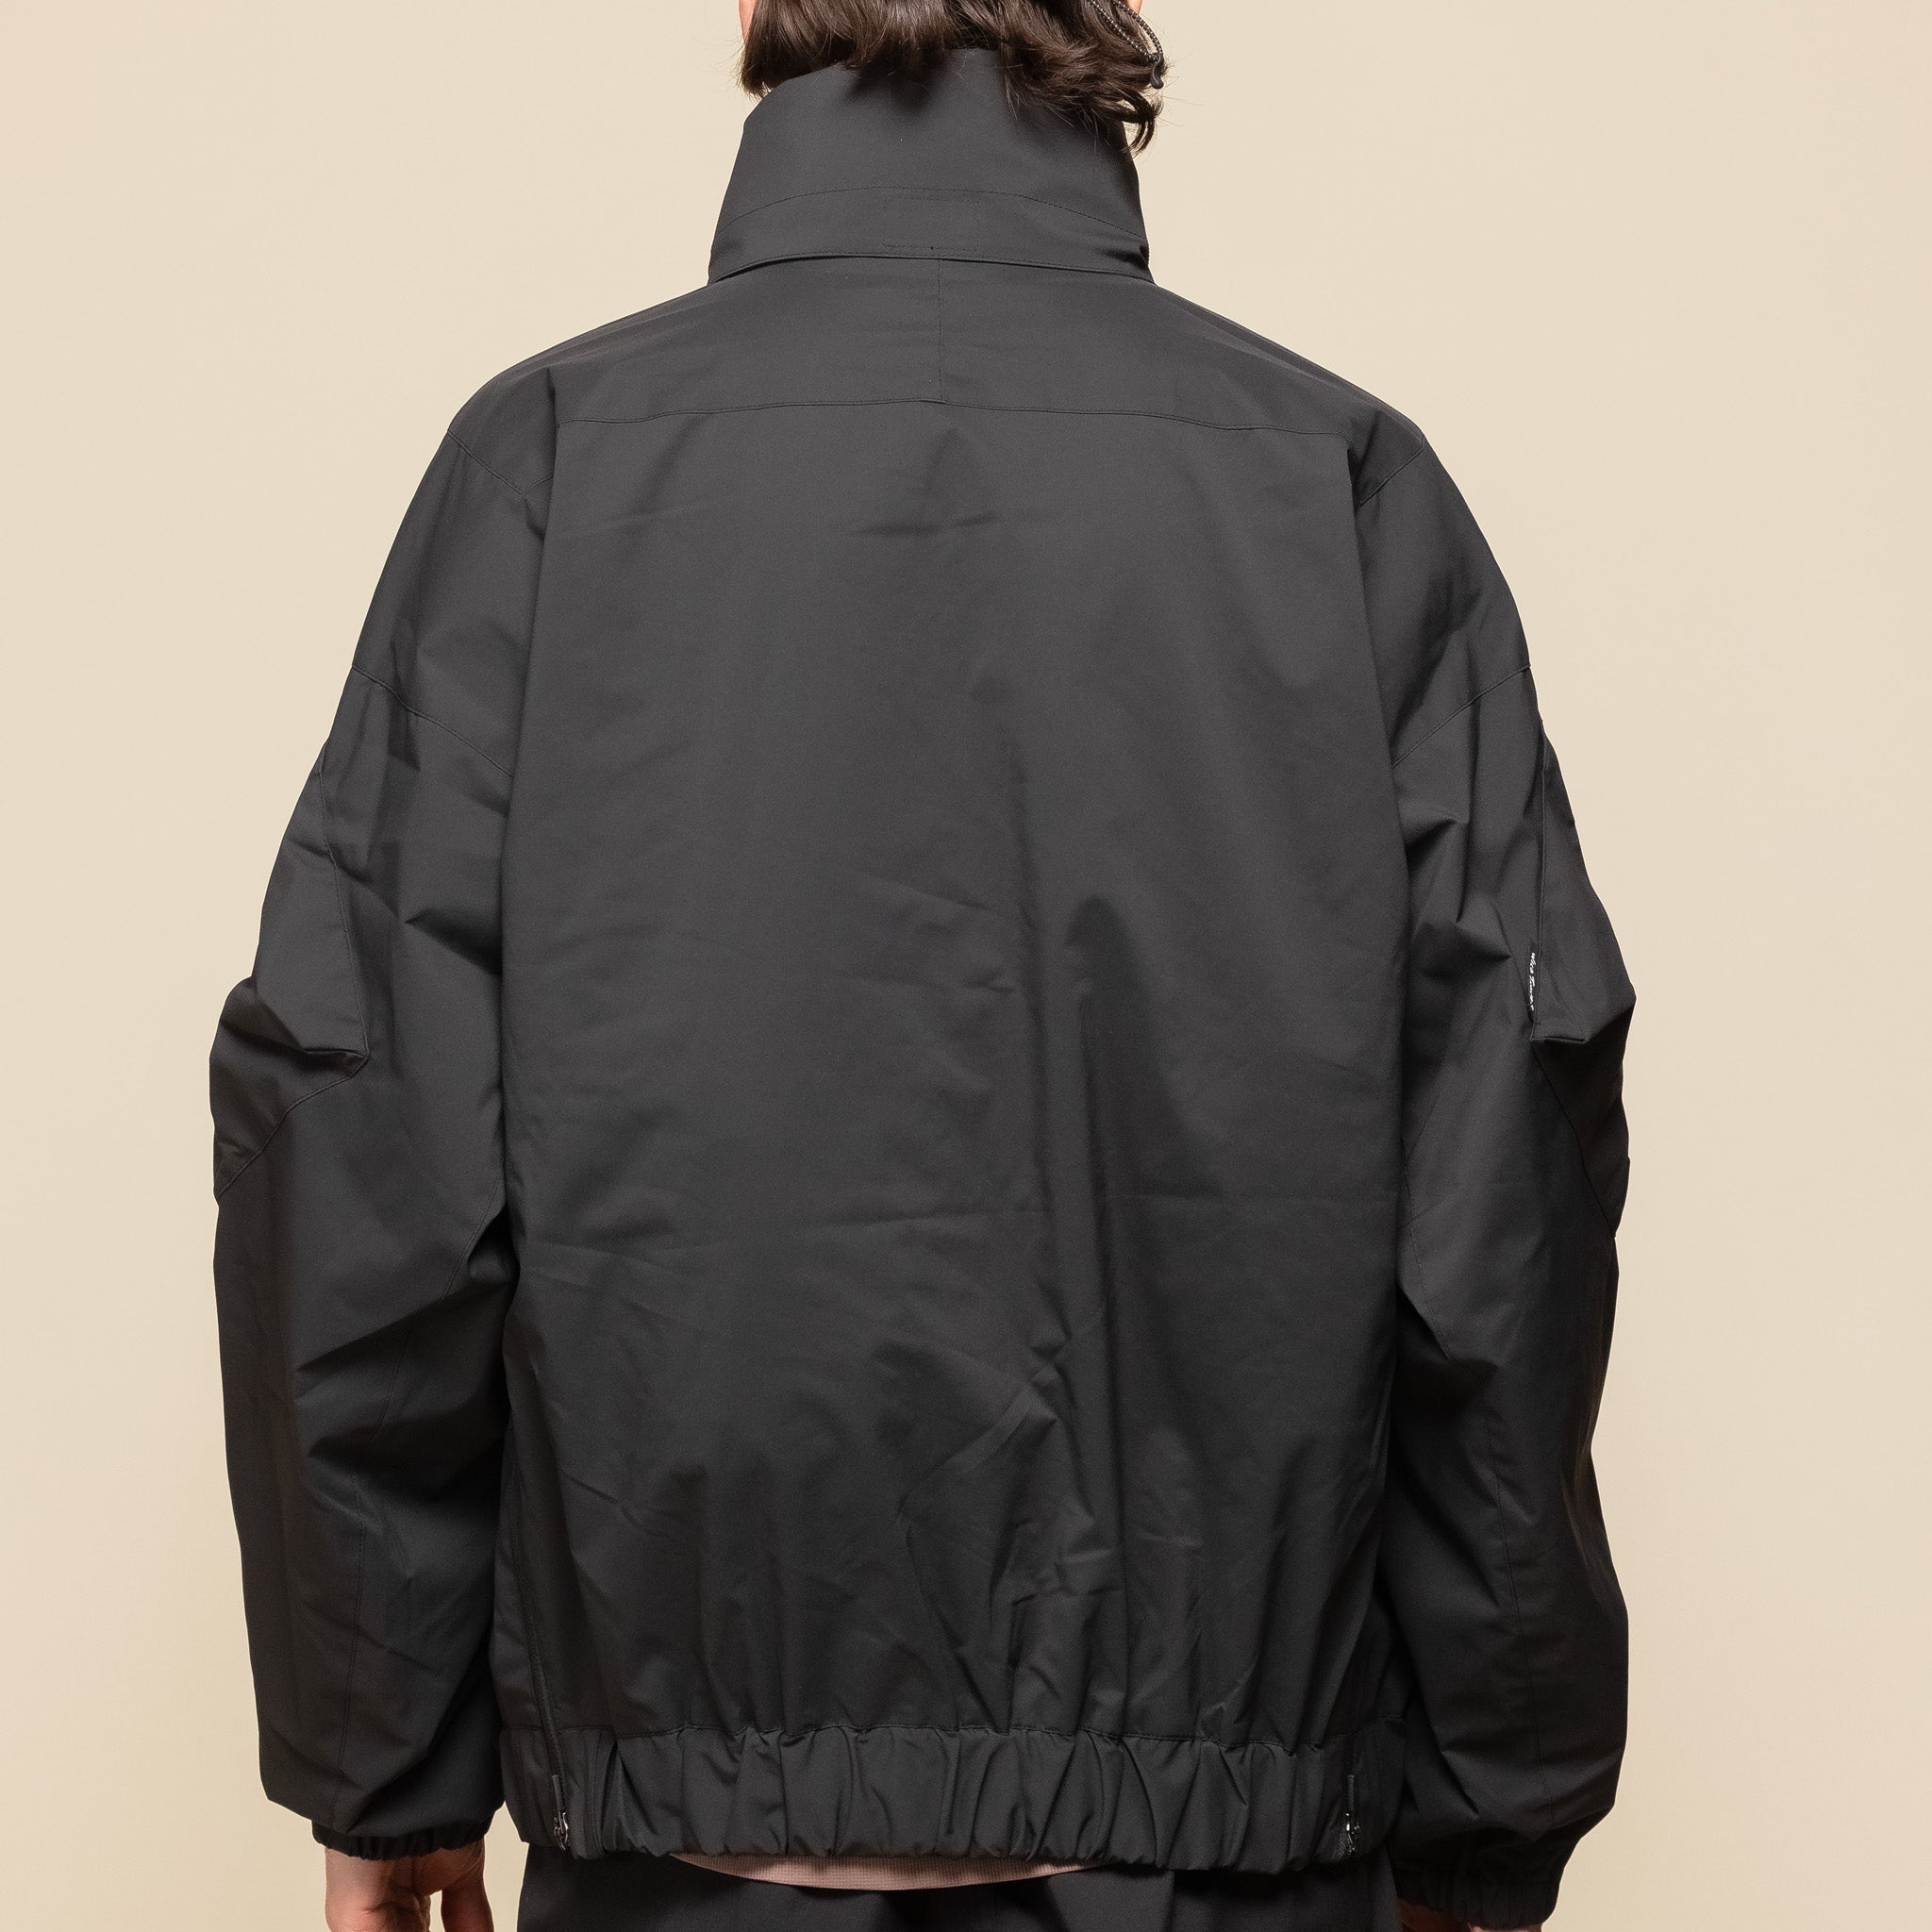 Poliquant - Protected Common Uniform Hooded Jacket - Black "poliquant stockists" "poliquant website" "poliquant jacket"